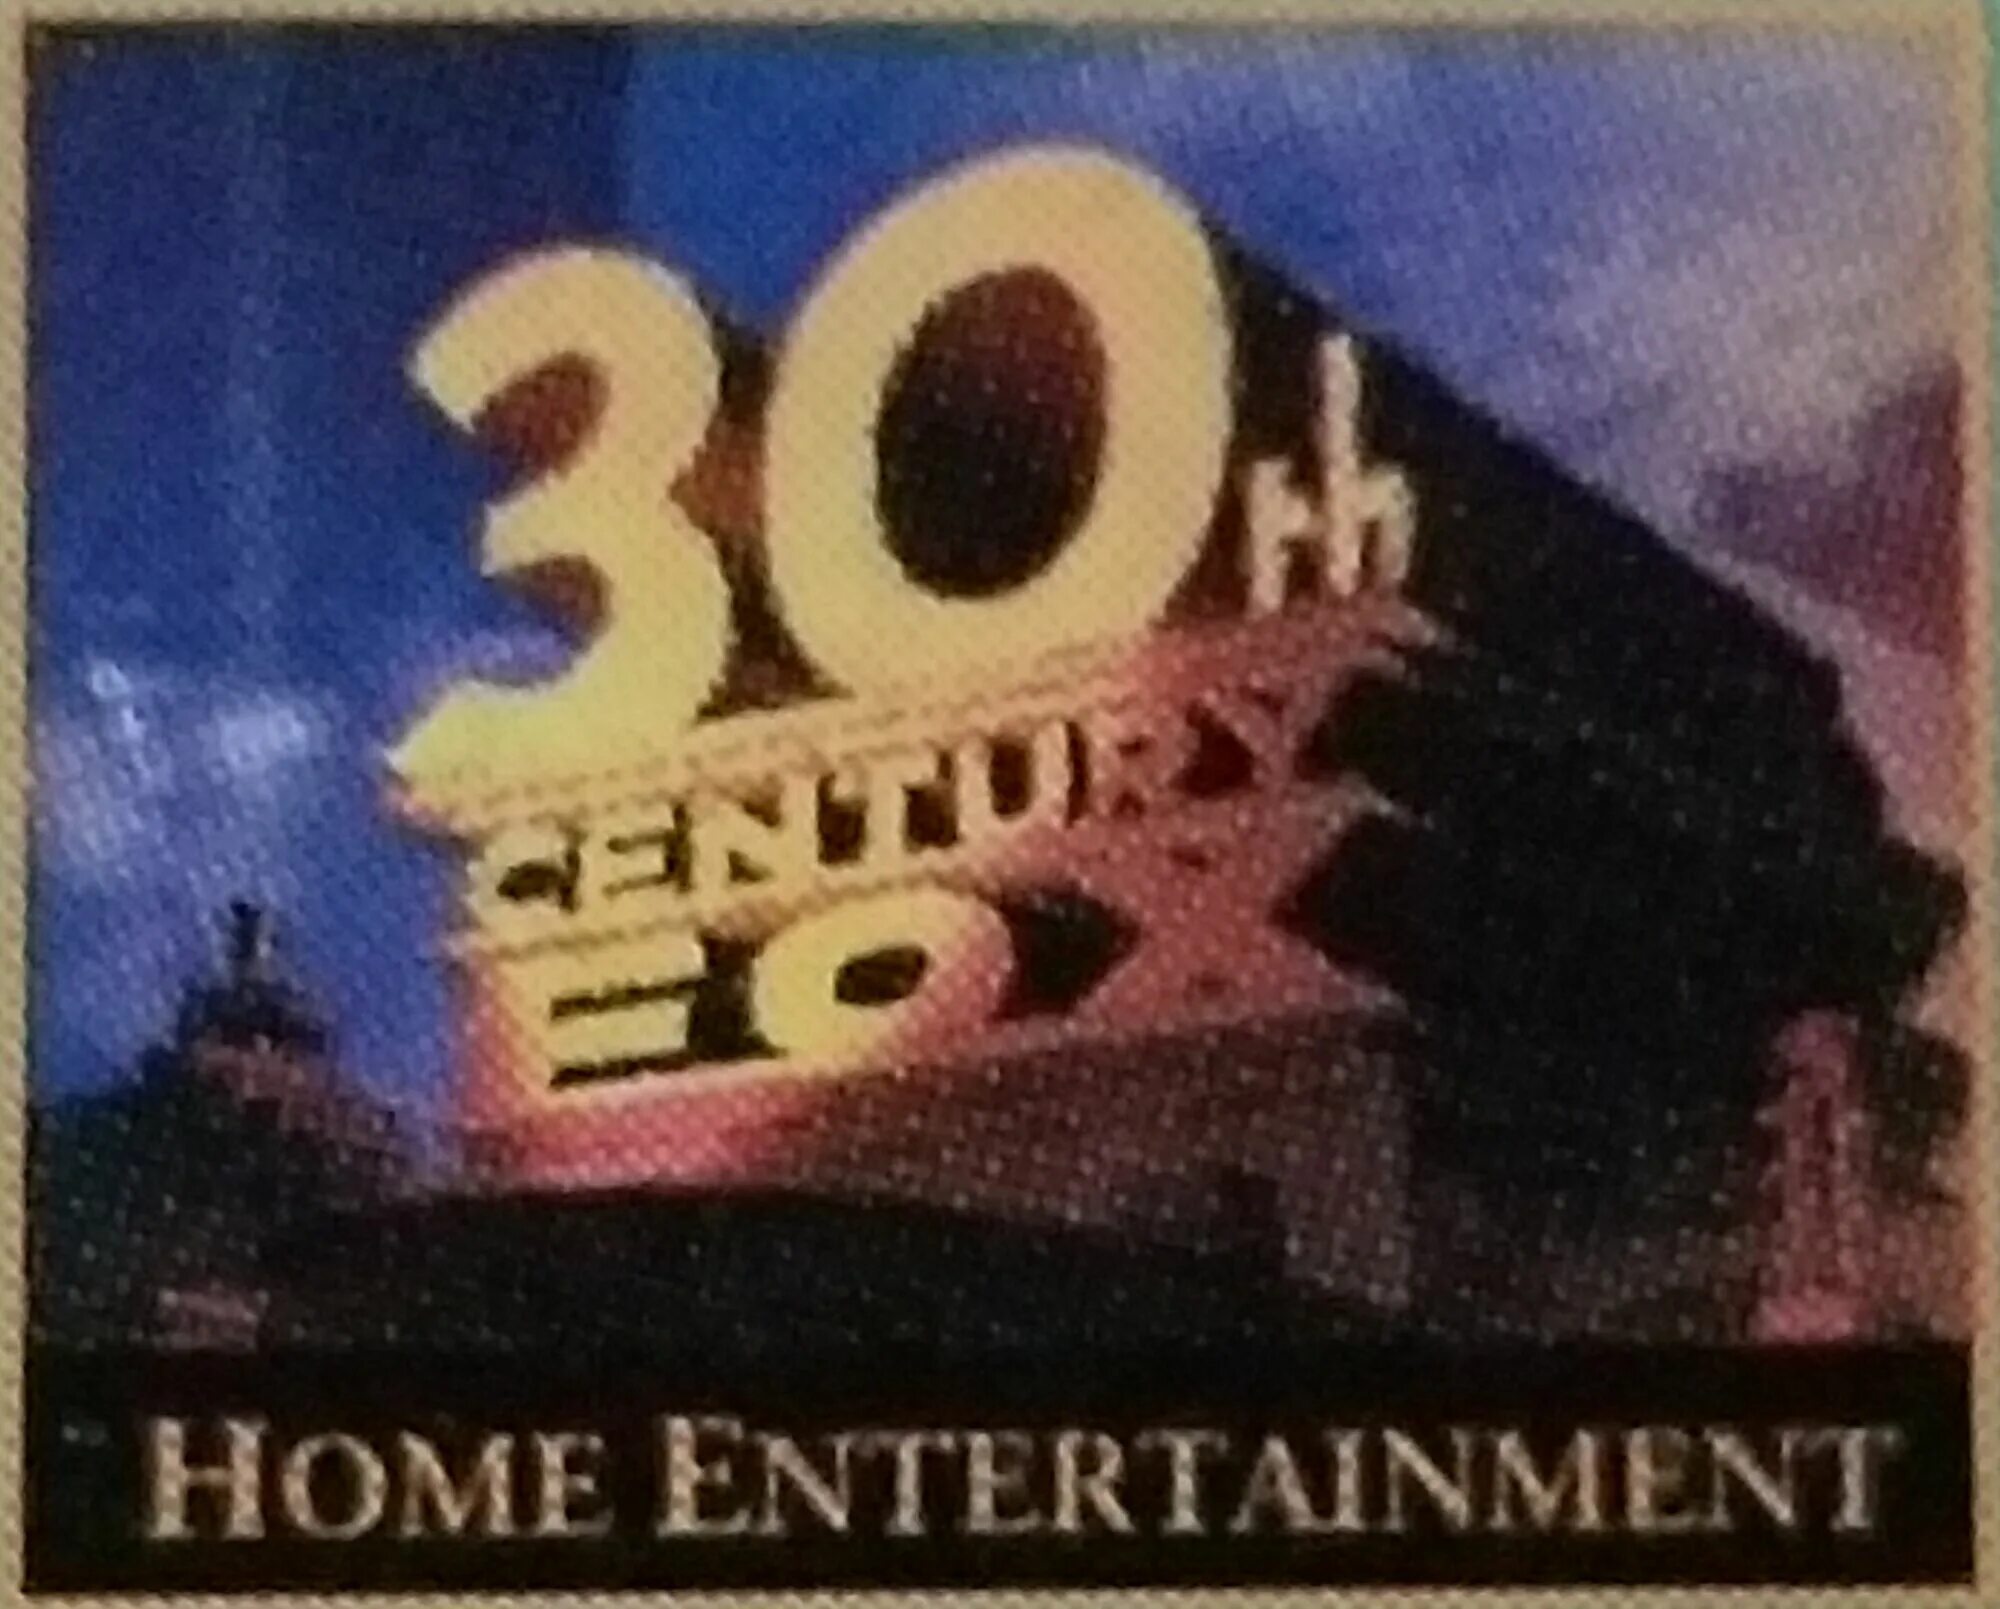 20th Century Fox Home Entertainment 2002. 20 Rh Century Fox Home Entertainment. 20th Century Fox Home Entertainment 255. 20th Century Fox logo. Fox home entertainment